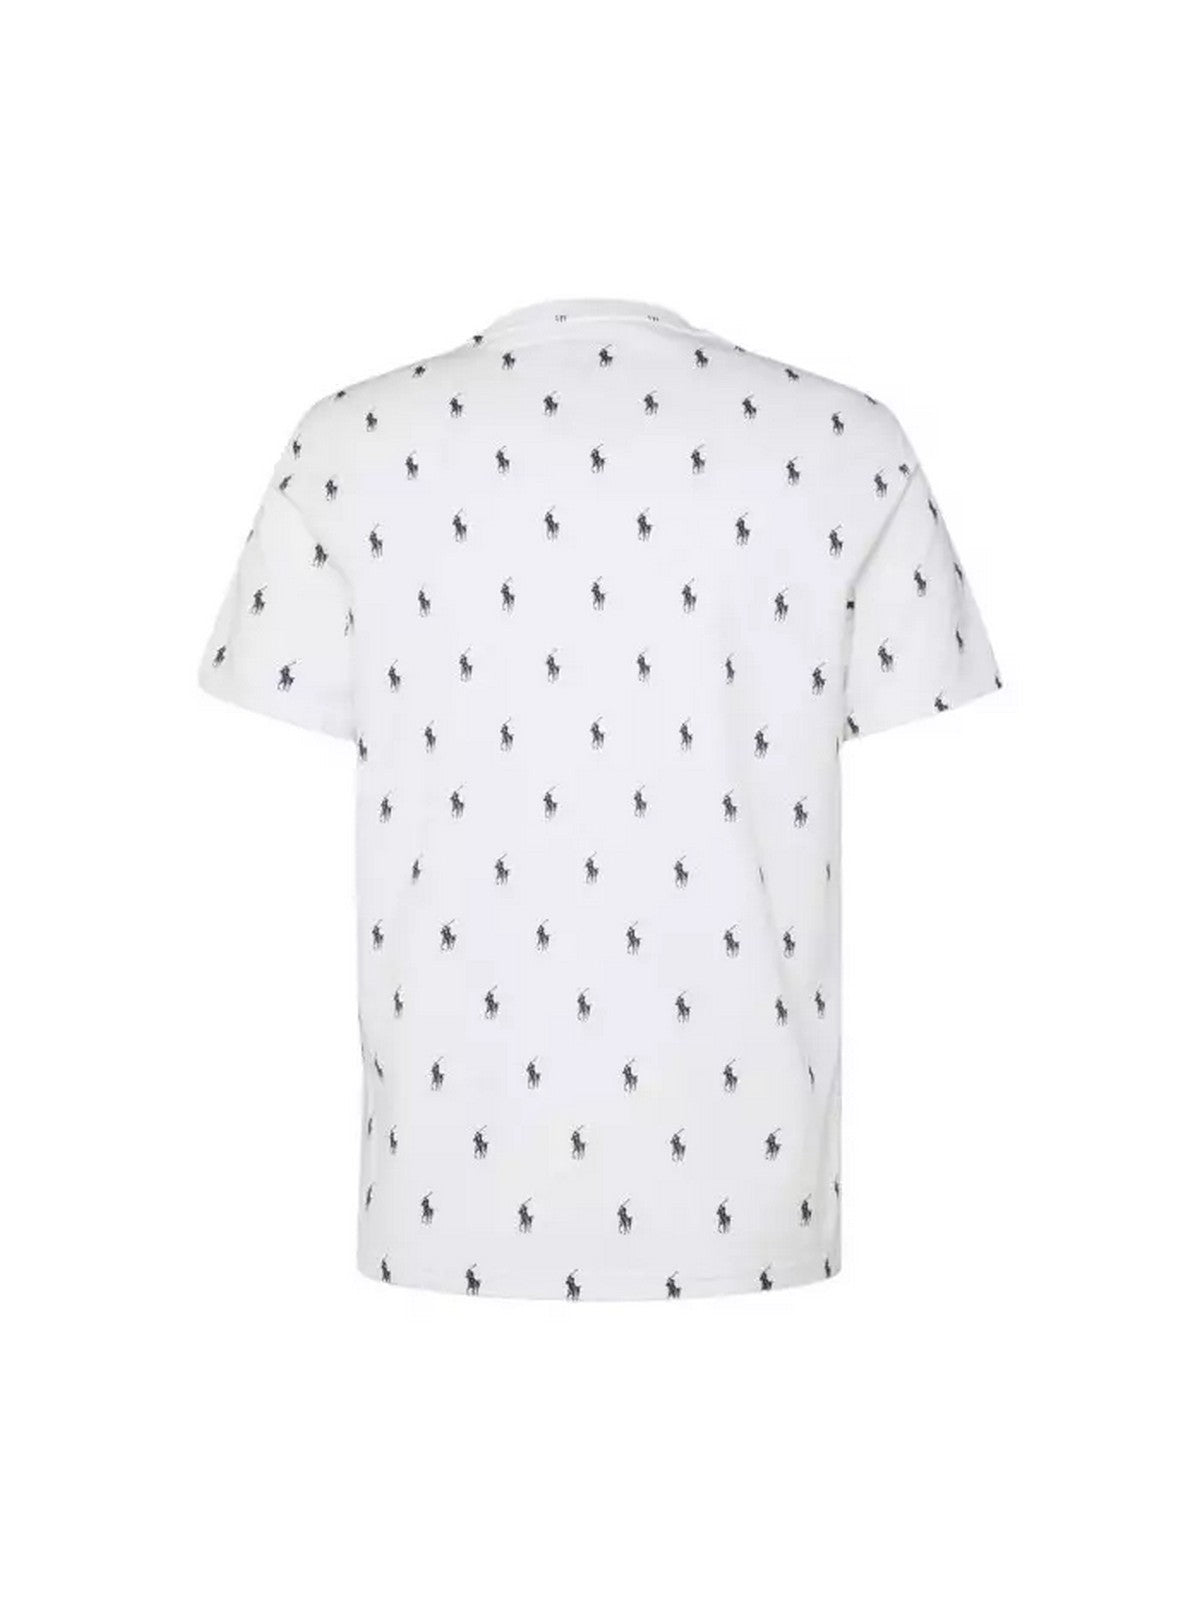 POLO RALPH LAUREN Hommes T-Shirt et Polo 714899612 001 Blanc